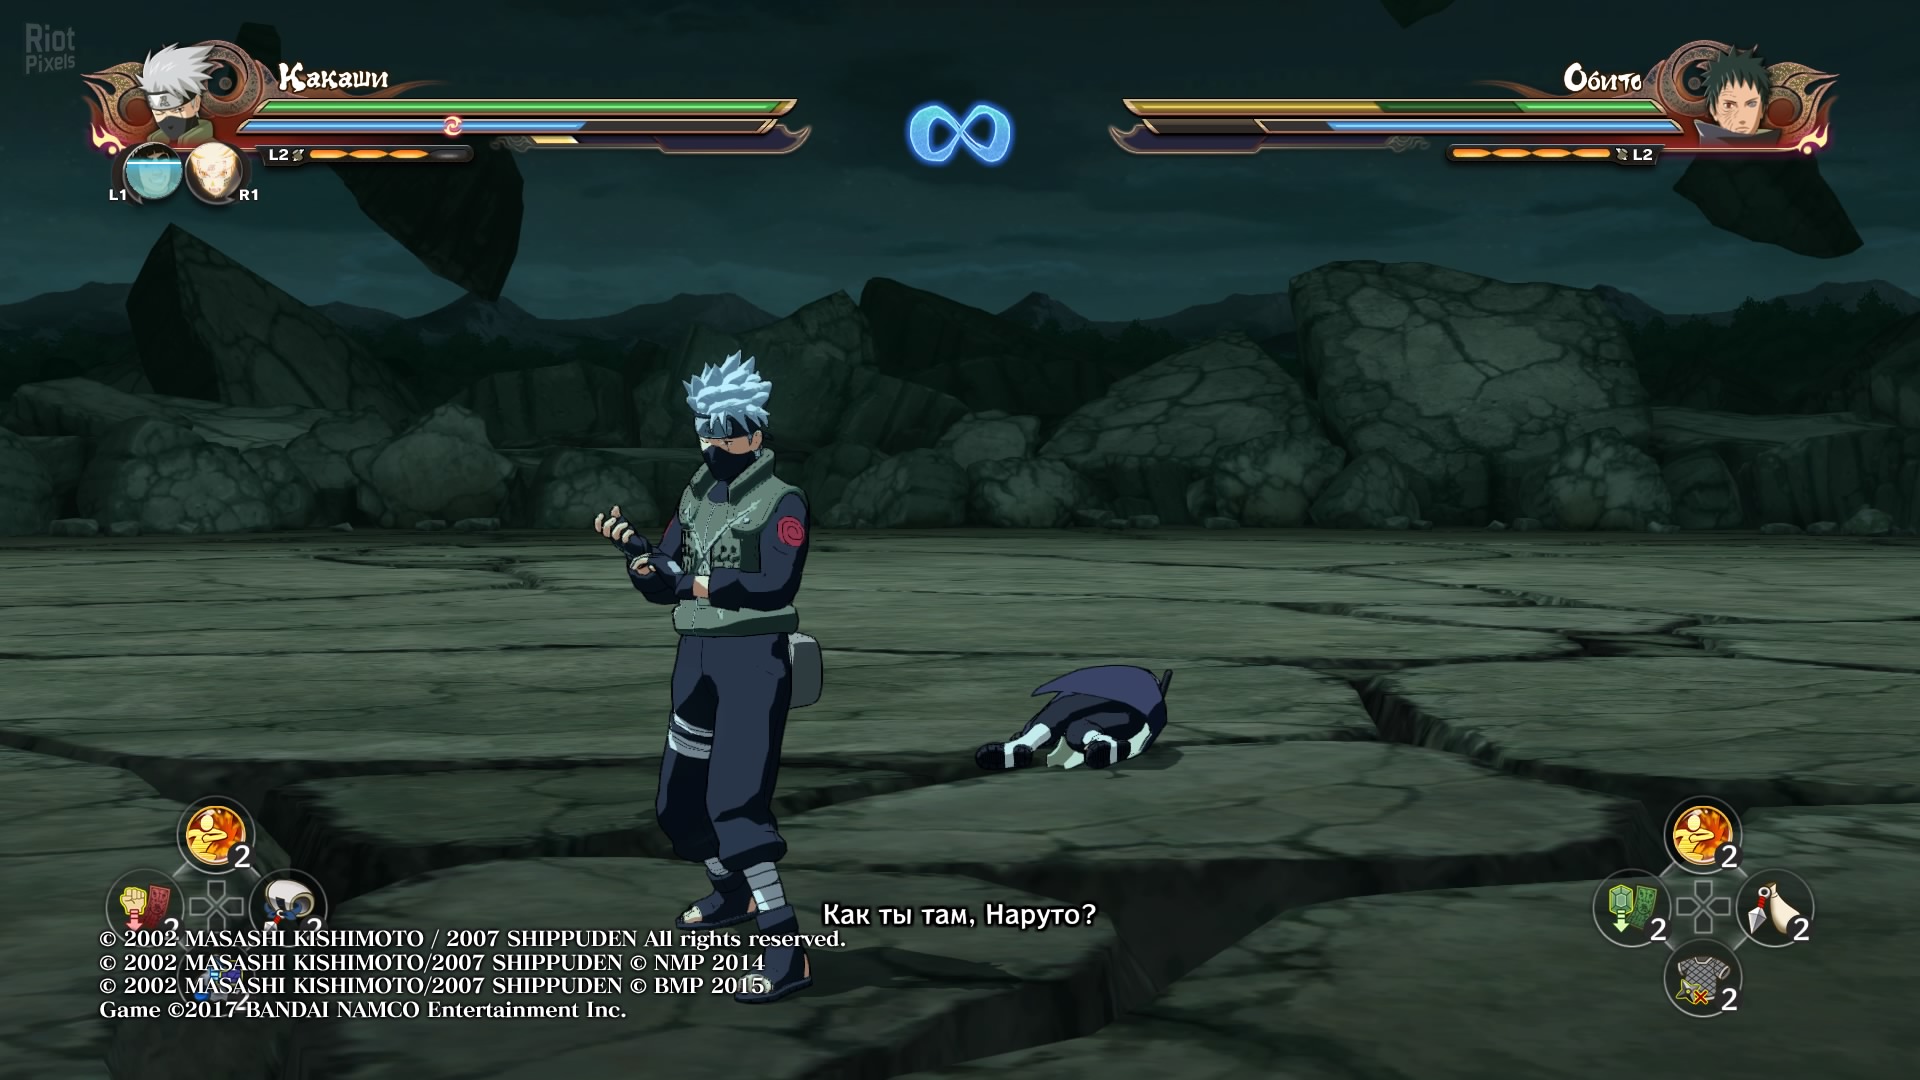 Ultimate Ninja 4: Naruto Shippuden Screenshots - Neoseeker